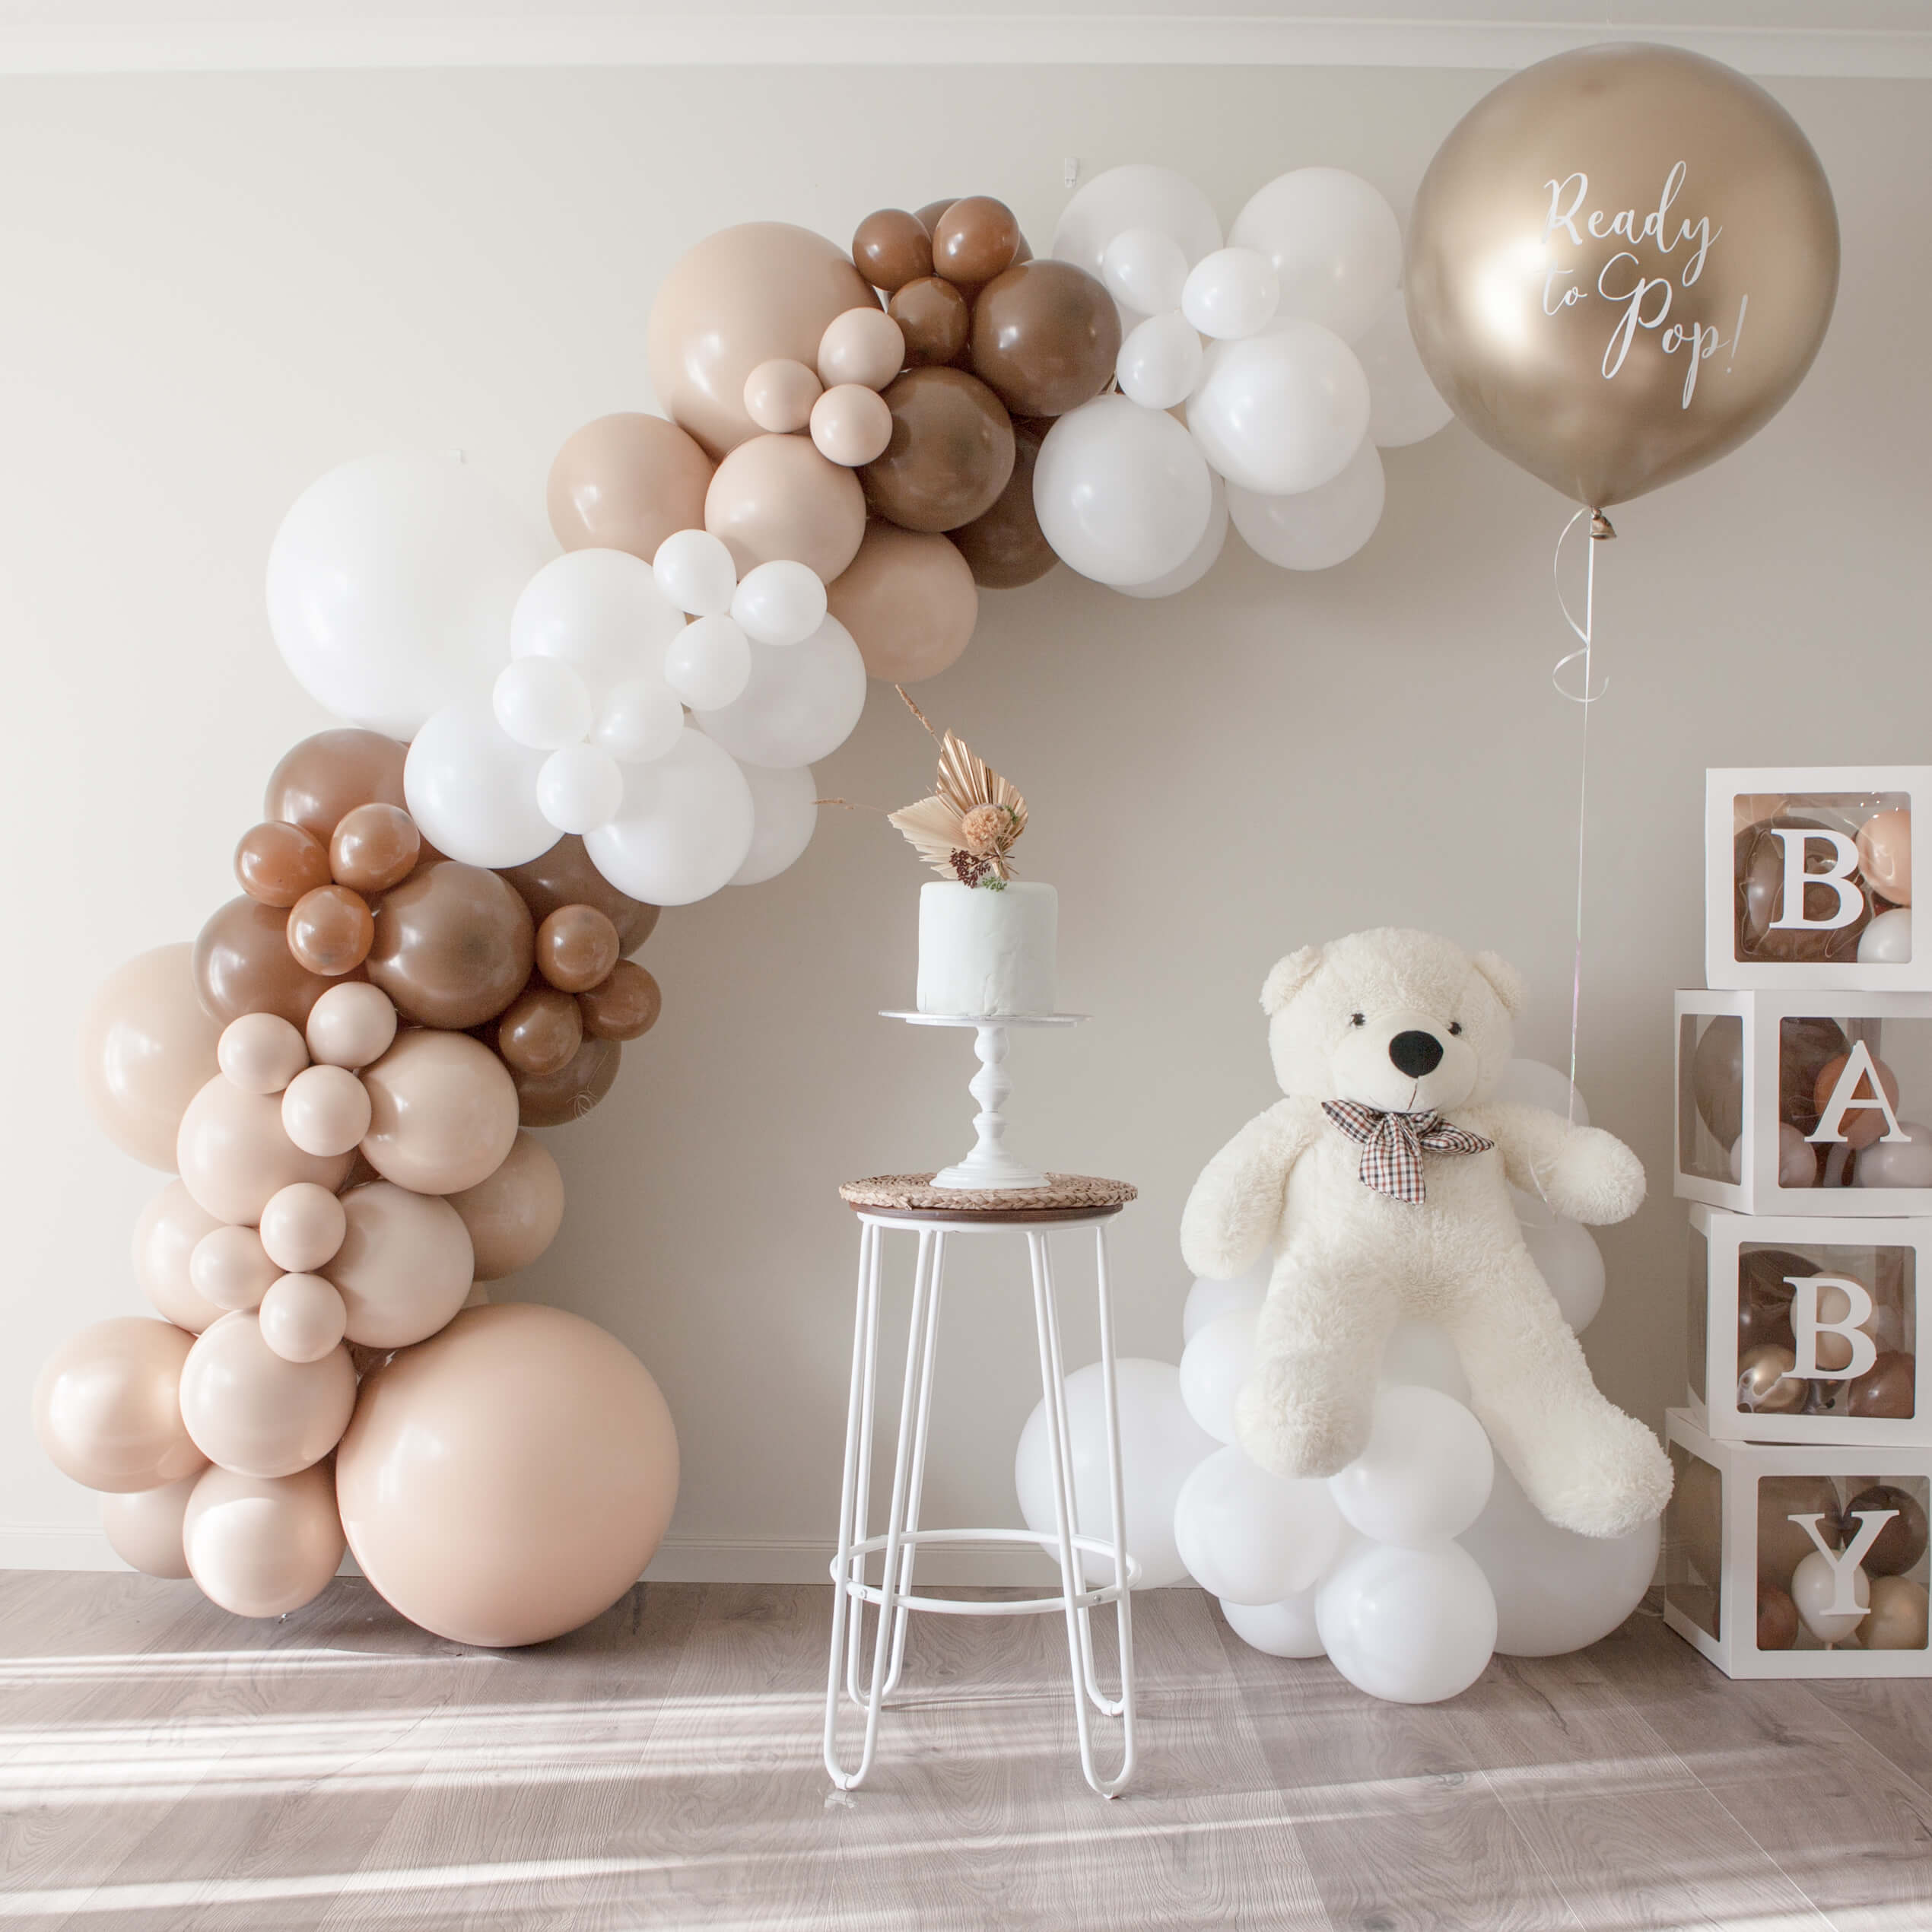 We Can't Bearly Wait Gender Reveal Balloon Garland DIY Kit - White & Brown